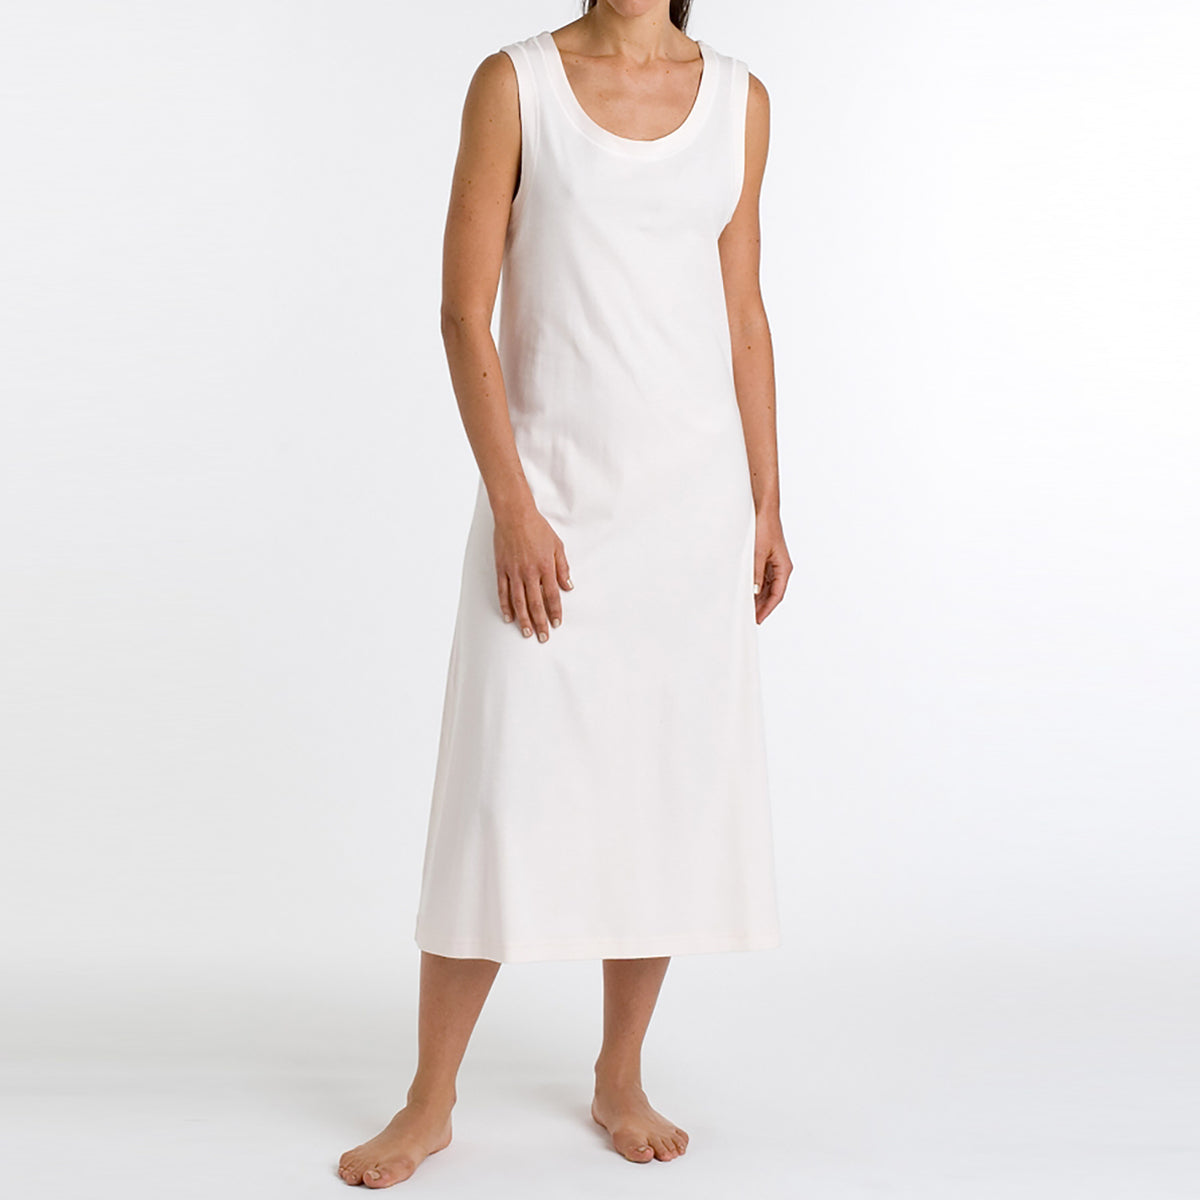 P-Jamas Butterknits nightgown in white p.jamas 365660 cotton nightie lingerie canada linea intima toronto